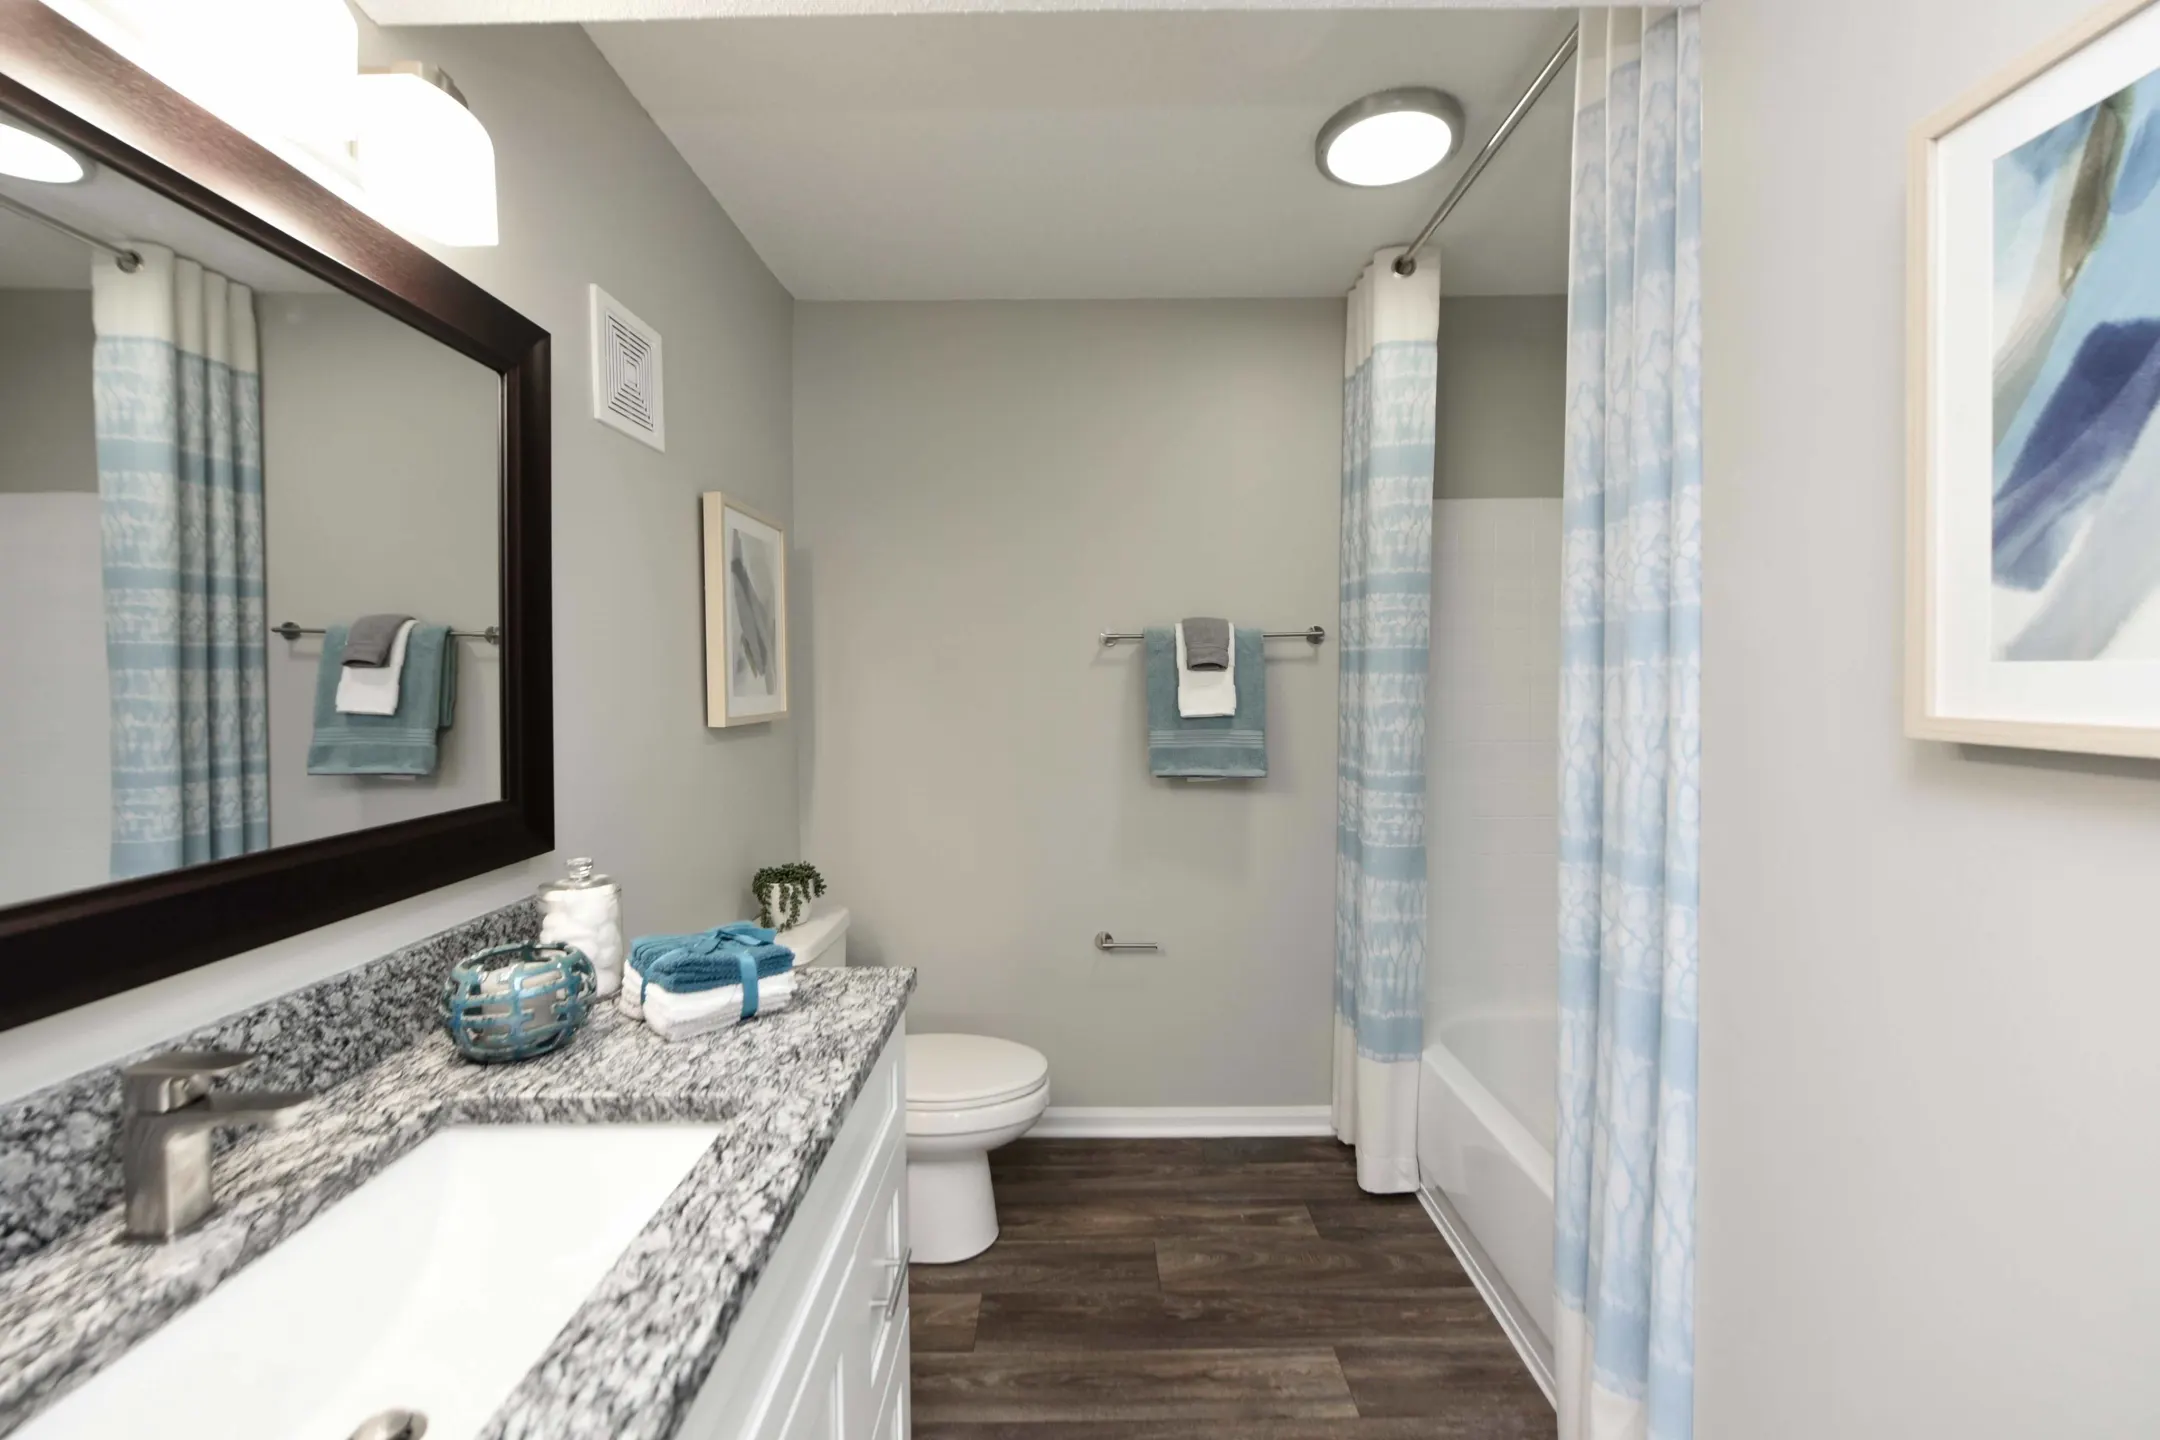 Bathroom - Emery Apartment Homes - Chattanooga, TN